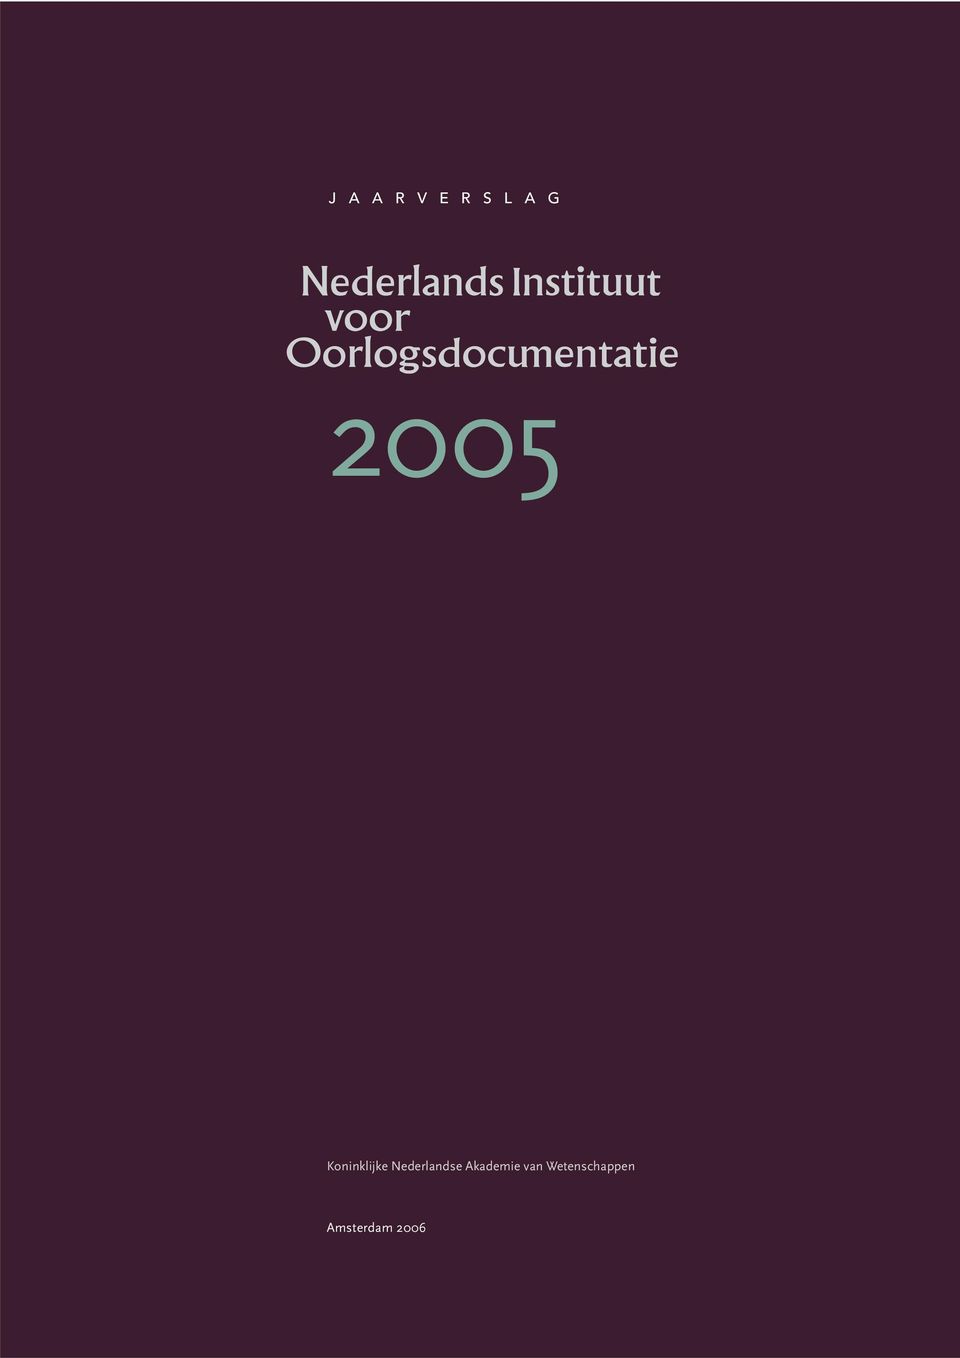 Nederlandse Akademie